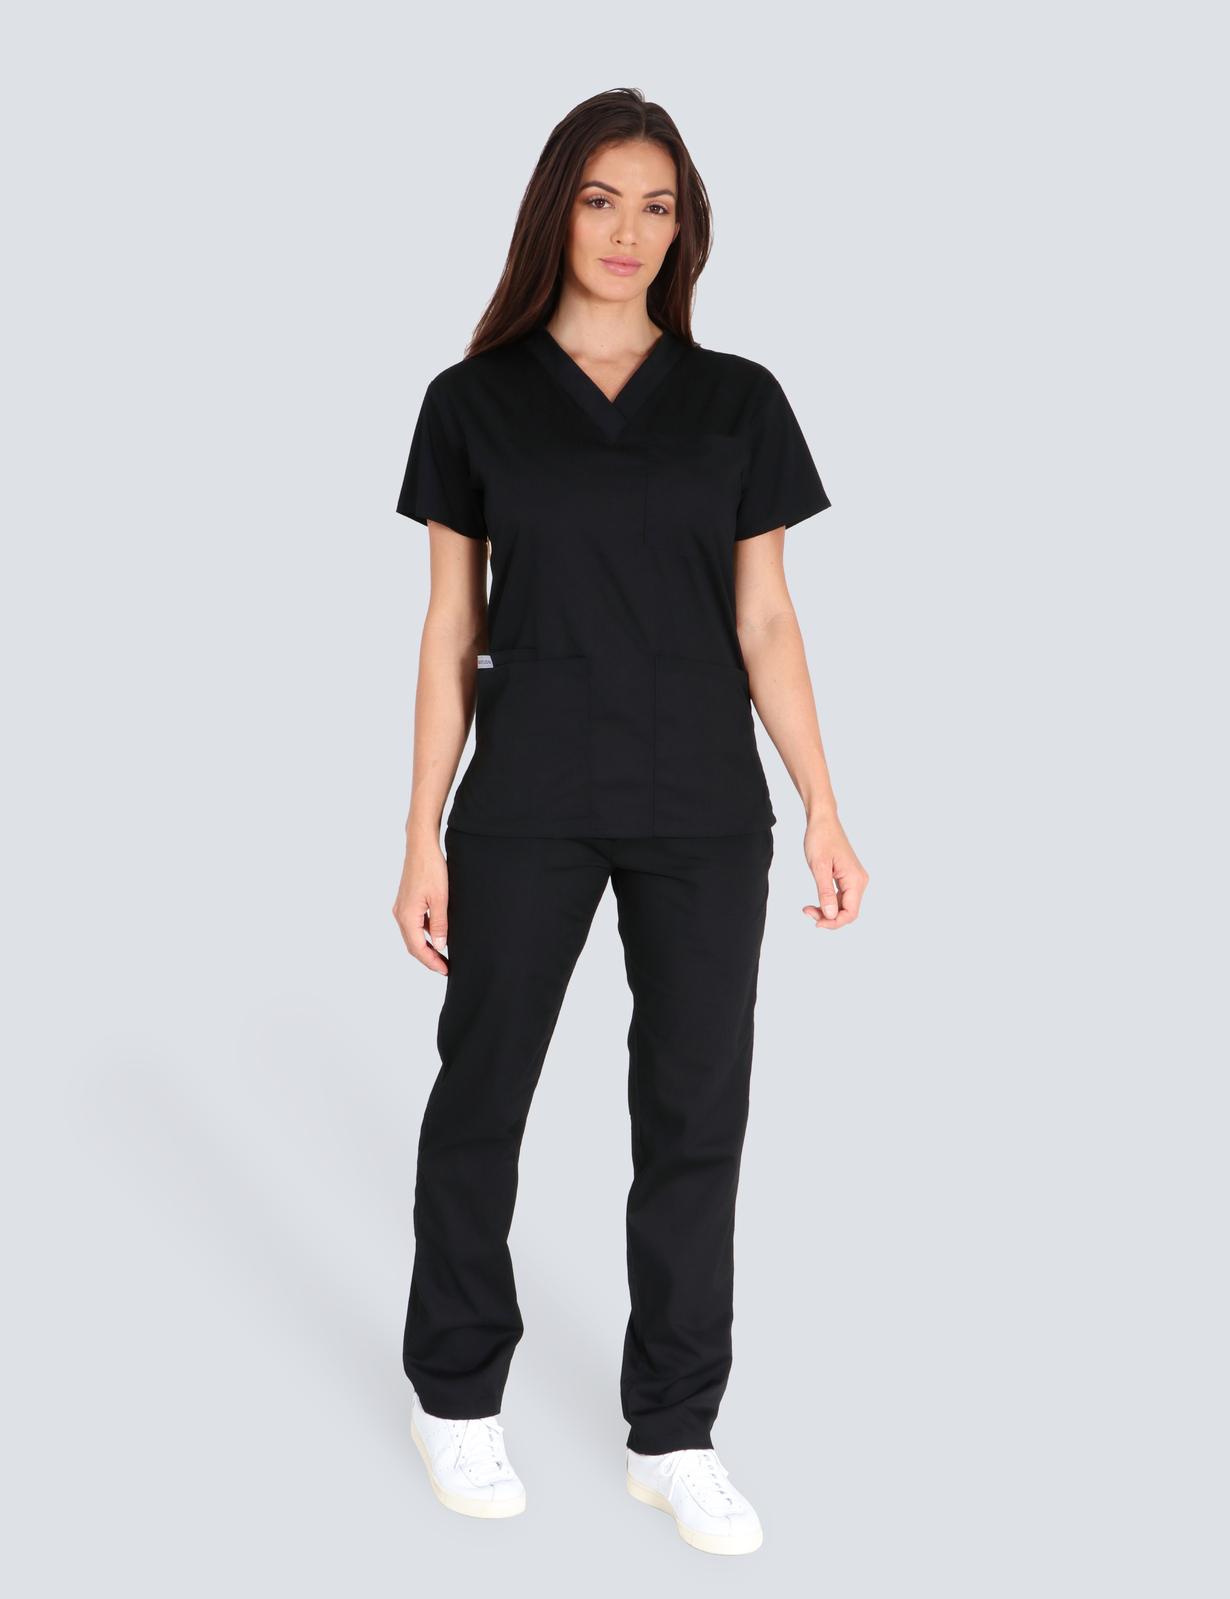 PAH - Medical Imaging (4 Pocket Scrub Top and Cargo Pants in Black incl Logos)